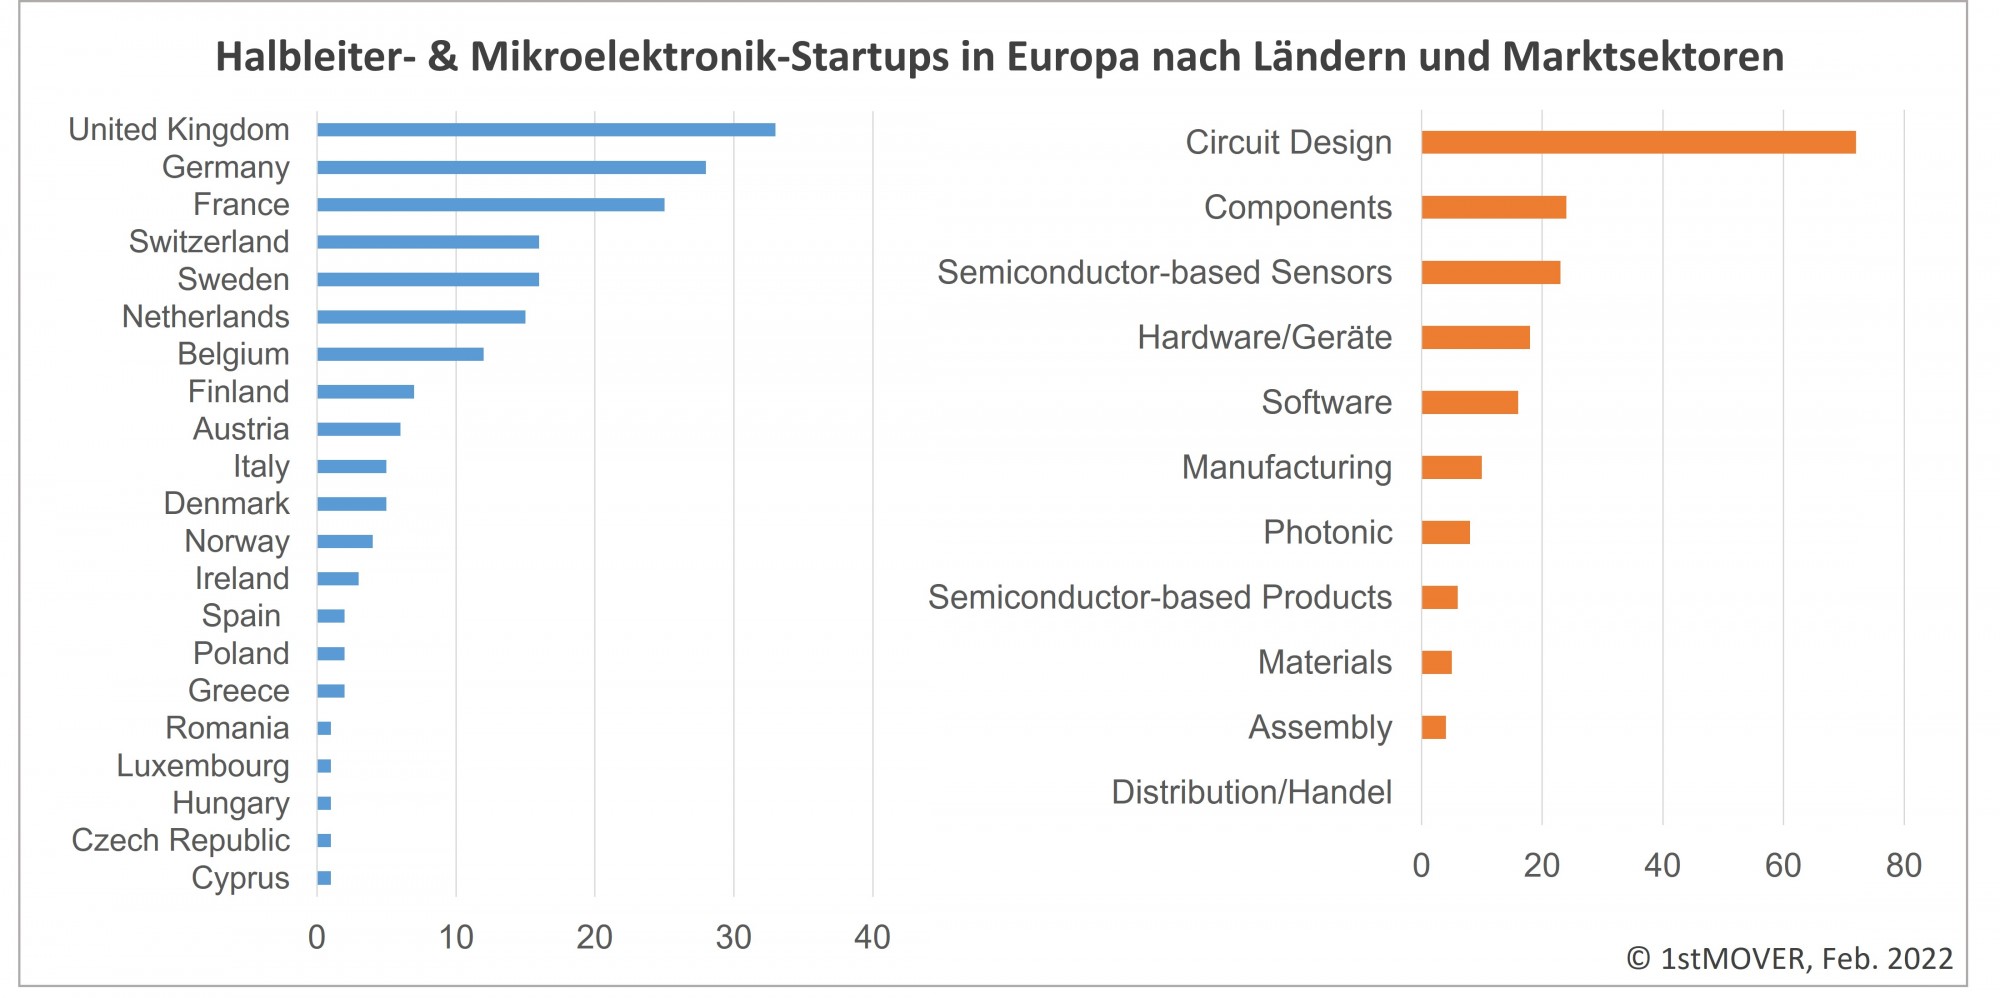 Halbleiter- und Mikroelektronik-Startups in Europa